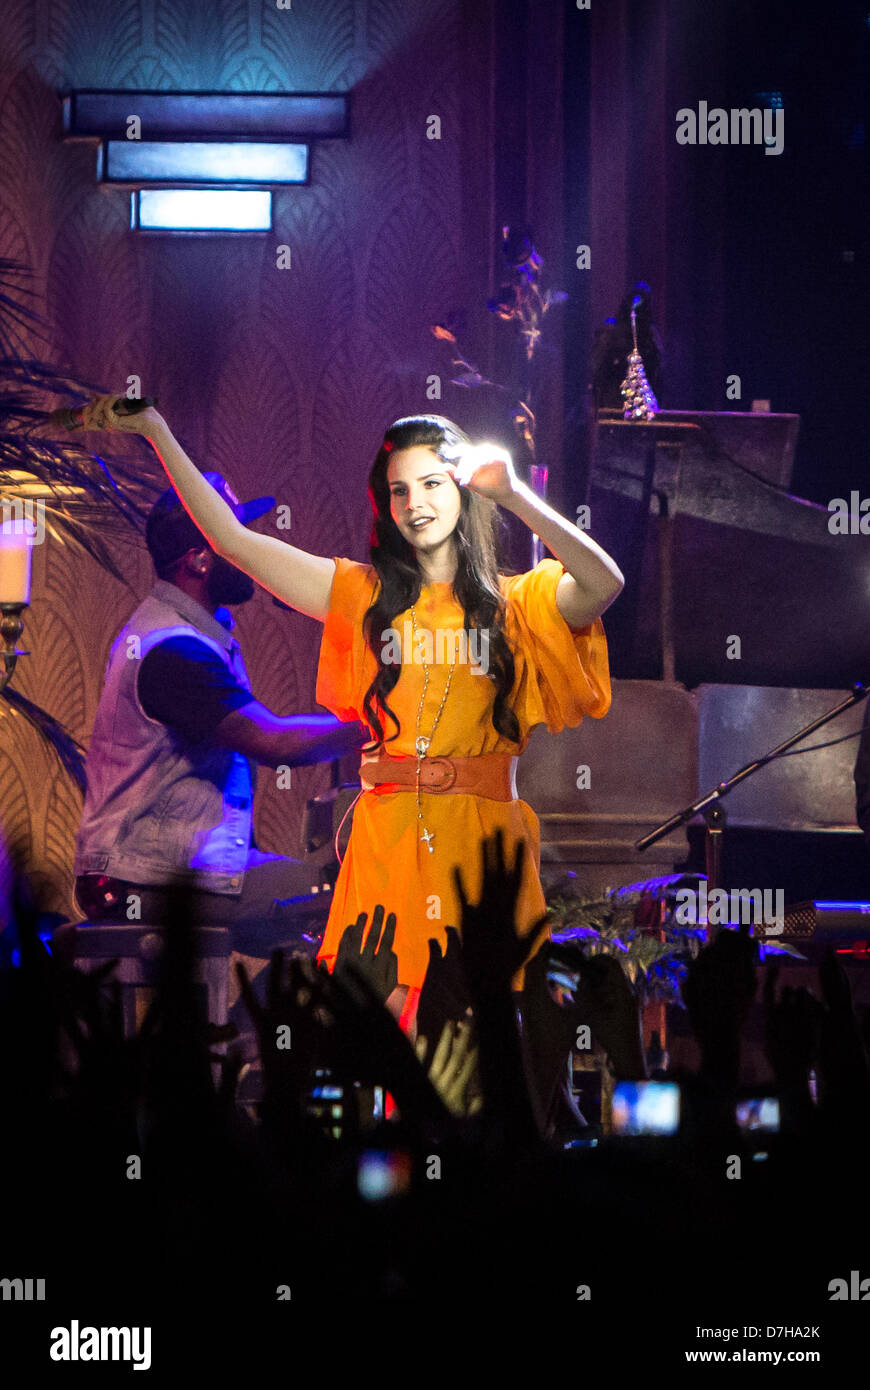 Assago Milan Italy. 07th May 2013. Lana Del Rey, model and singer, performs live at Mediolanum Forum. Credit:  Rodolfo Sassano / Alamy Live News Stock Photo